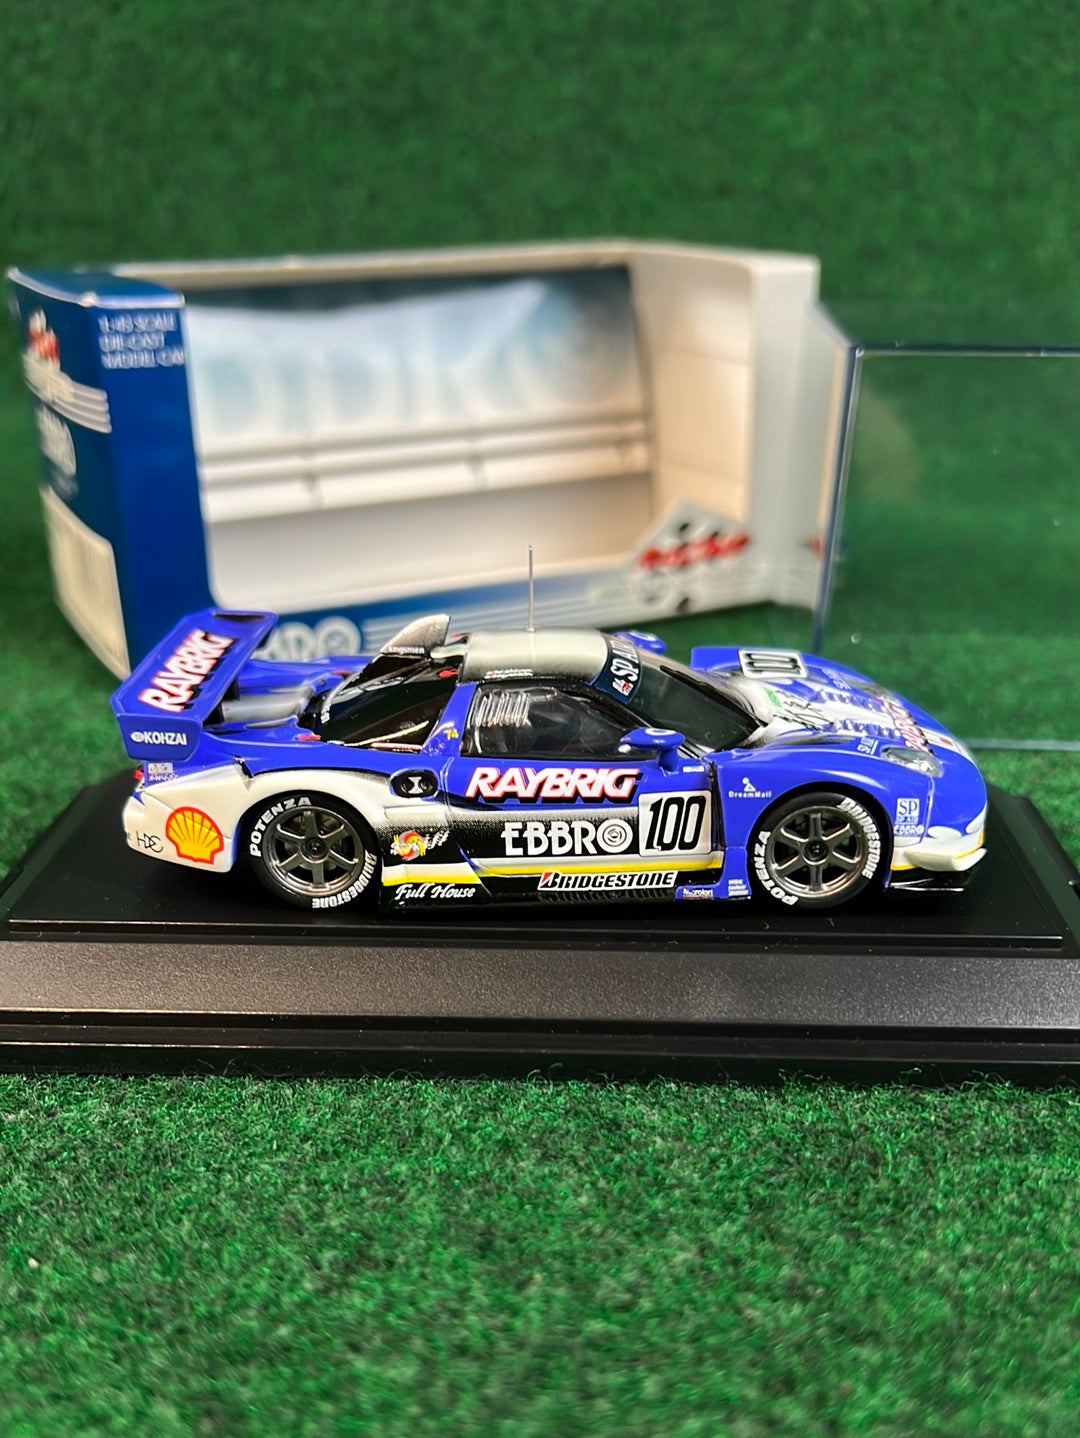 EBBRO Racing Car Collection: JGTC RAYBRIG 2004 Honda NSX Suzuka 1000km 1/43 Scale Diecast